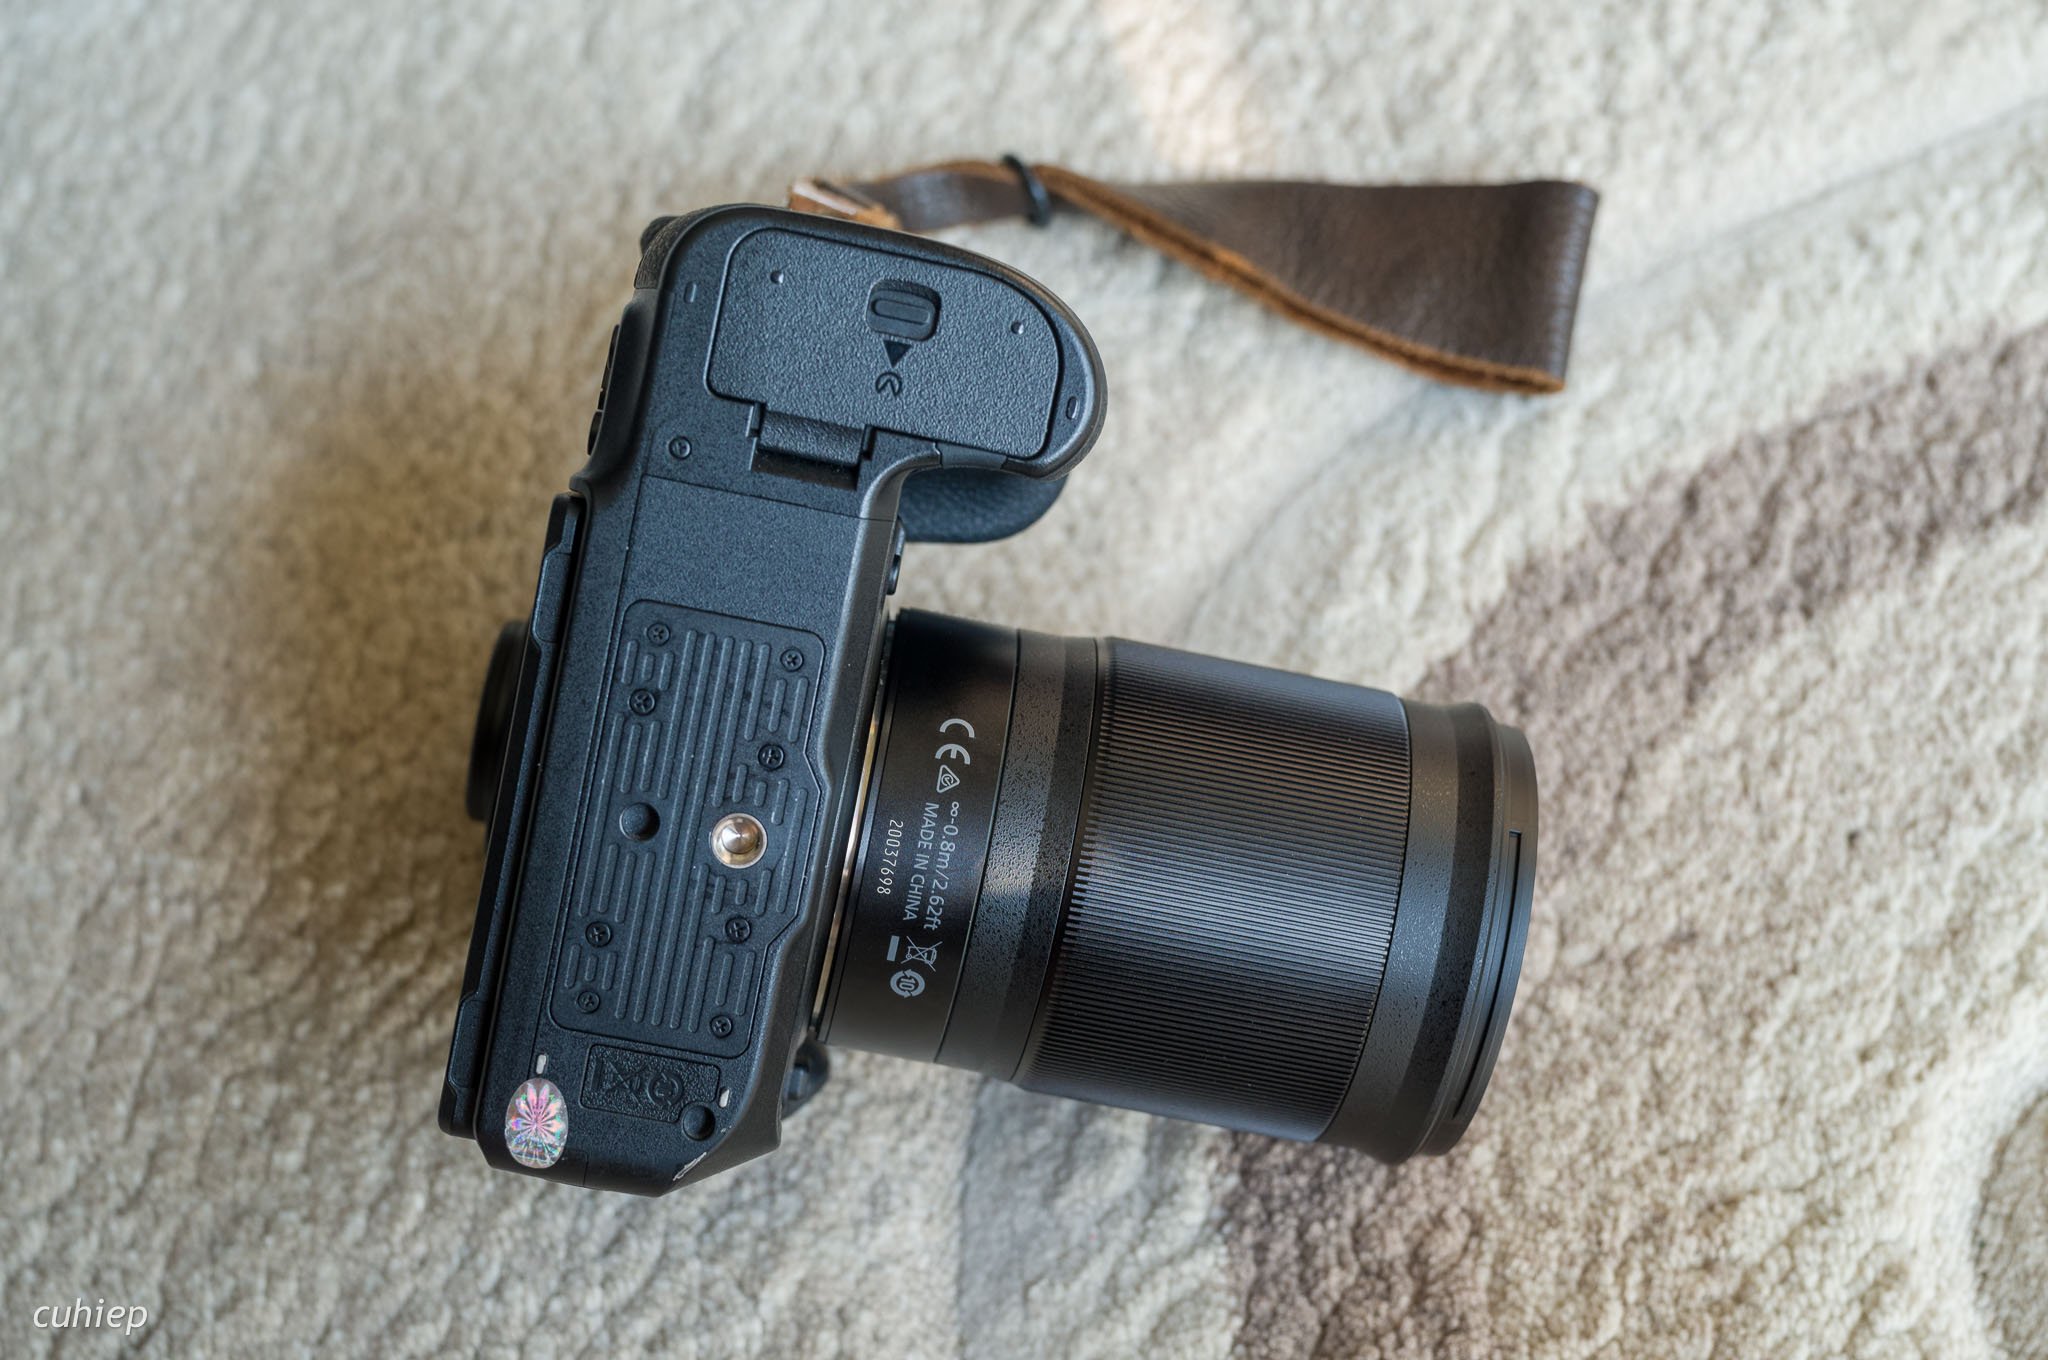 Nikon-85mm-F1.8-S-tinhte-cuhiep-06.jpg